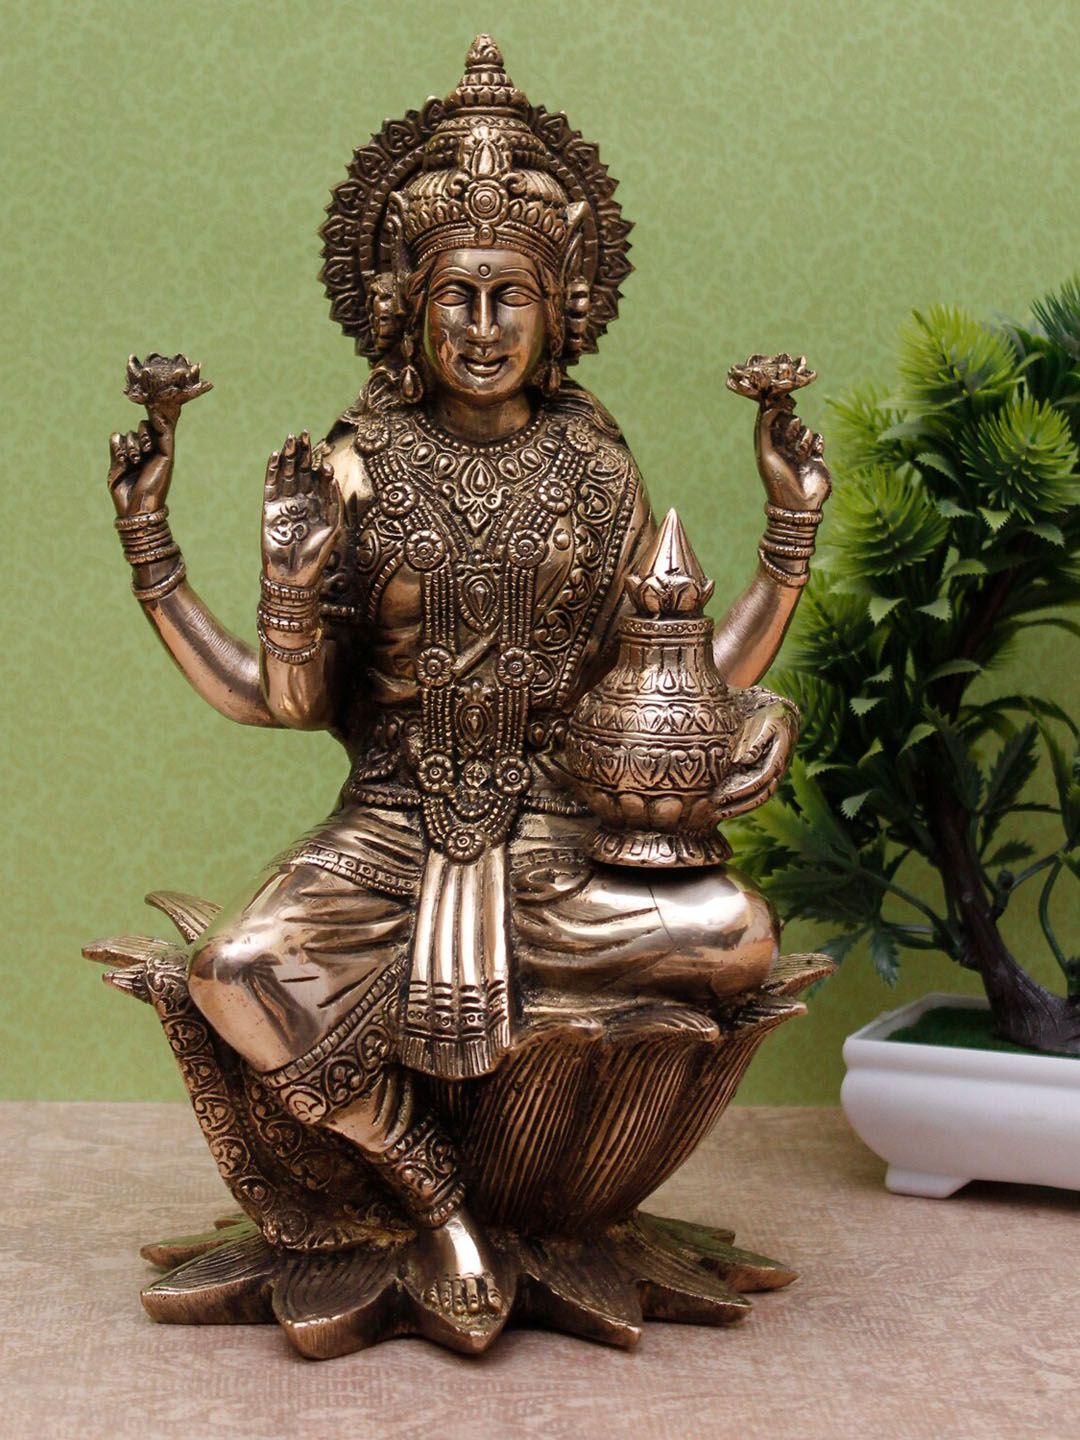 StatueStudio Gold-Toned Antique Lakshmi Idol With Money Pot Showpiece Price in India